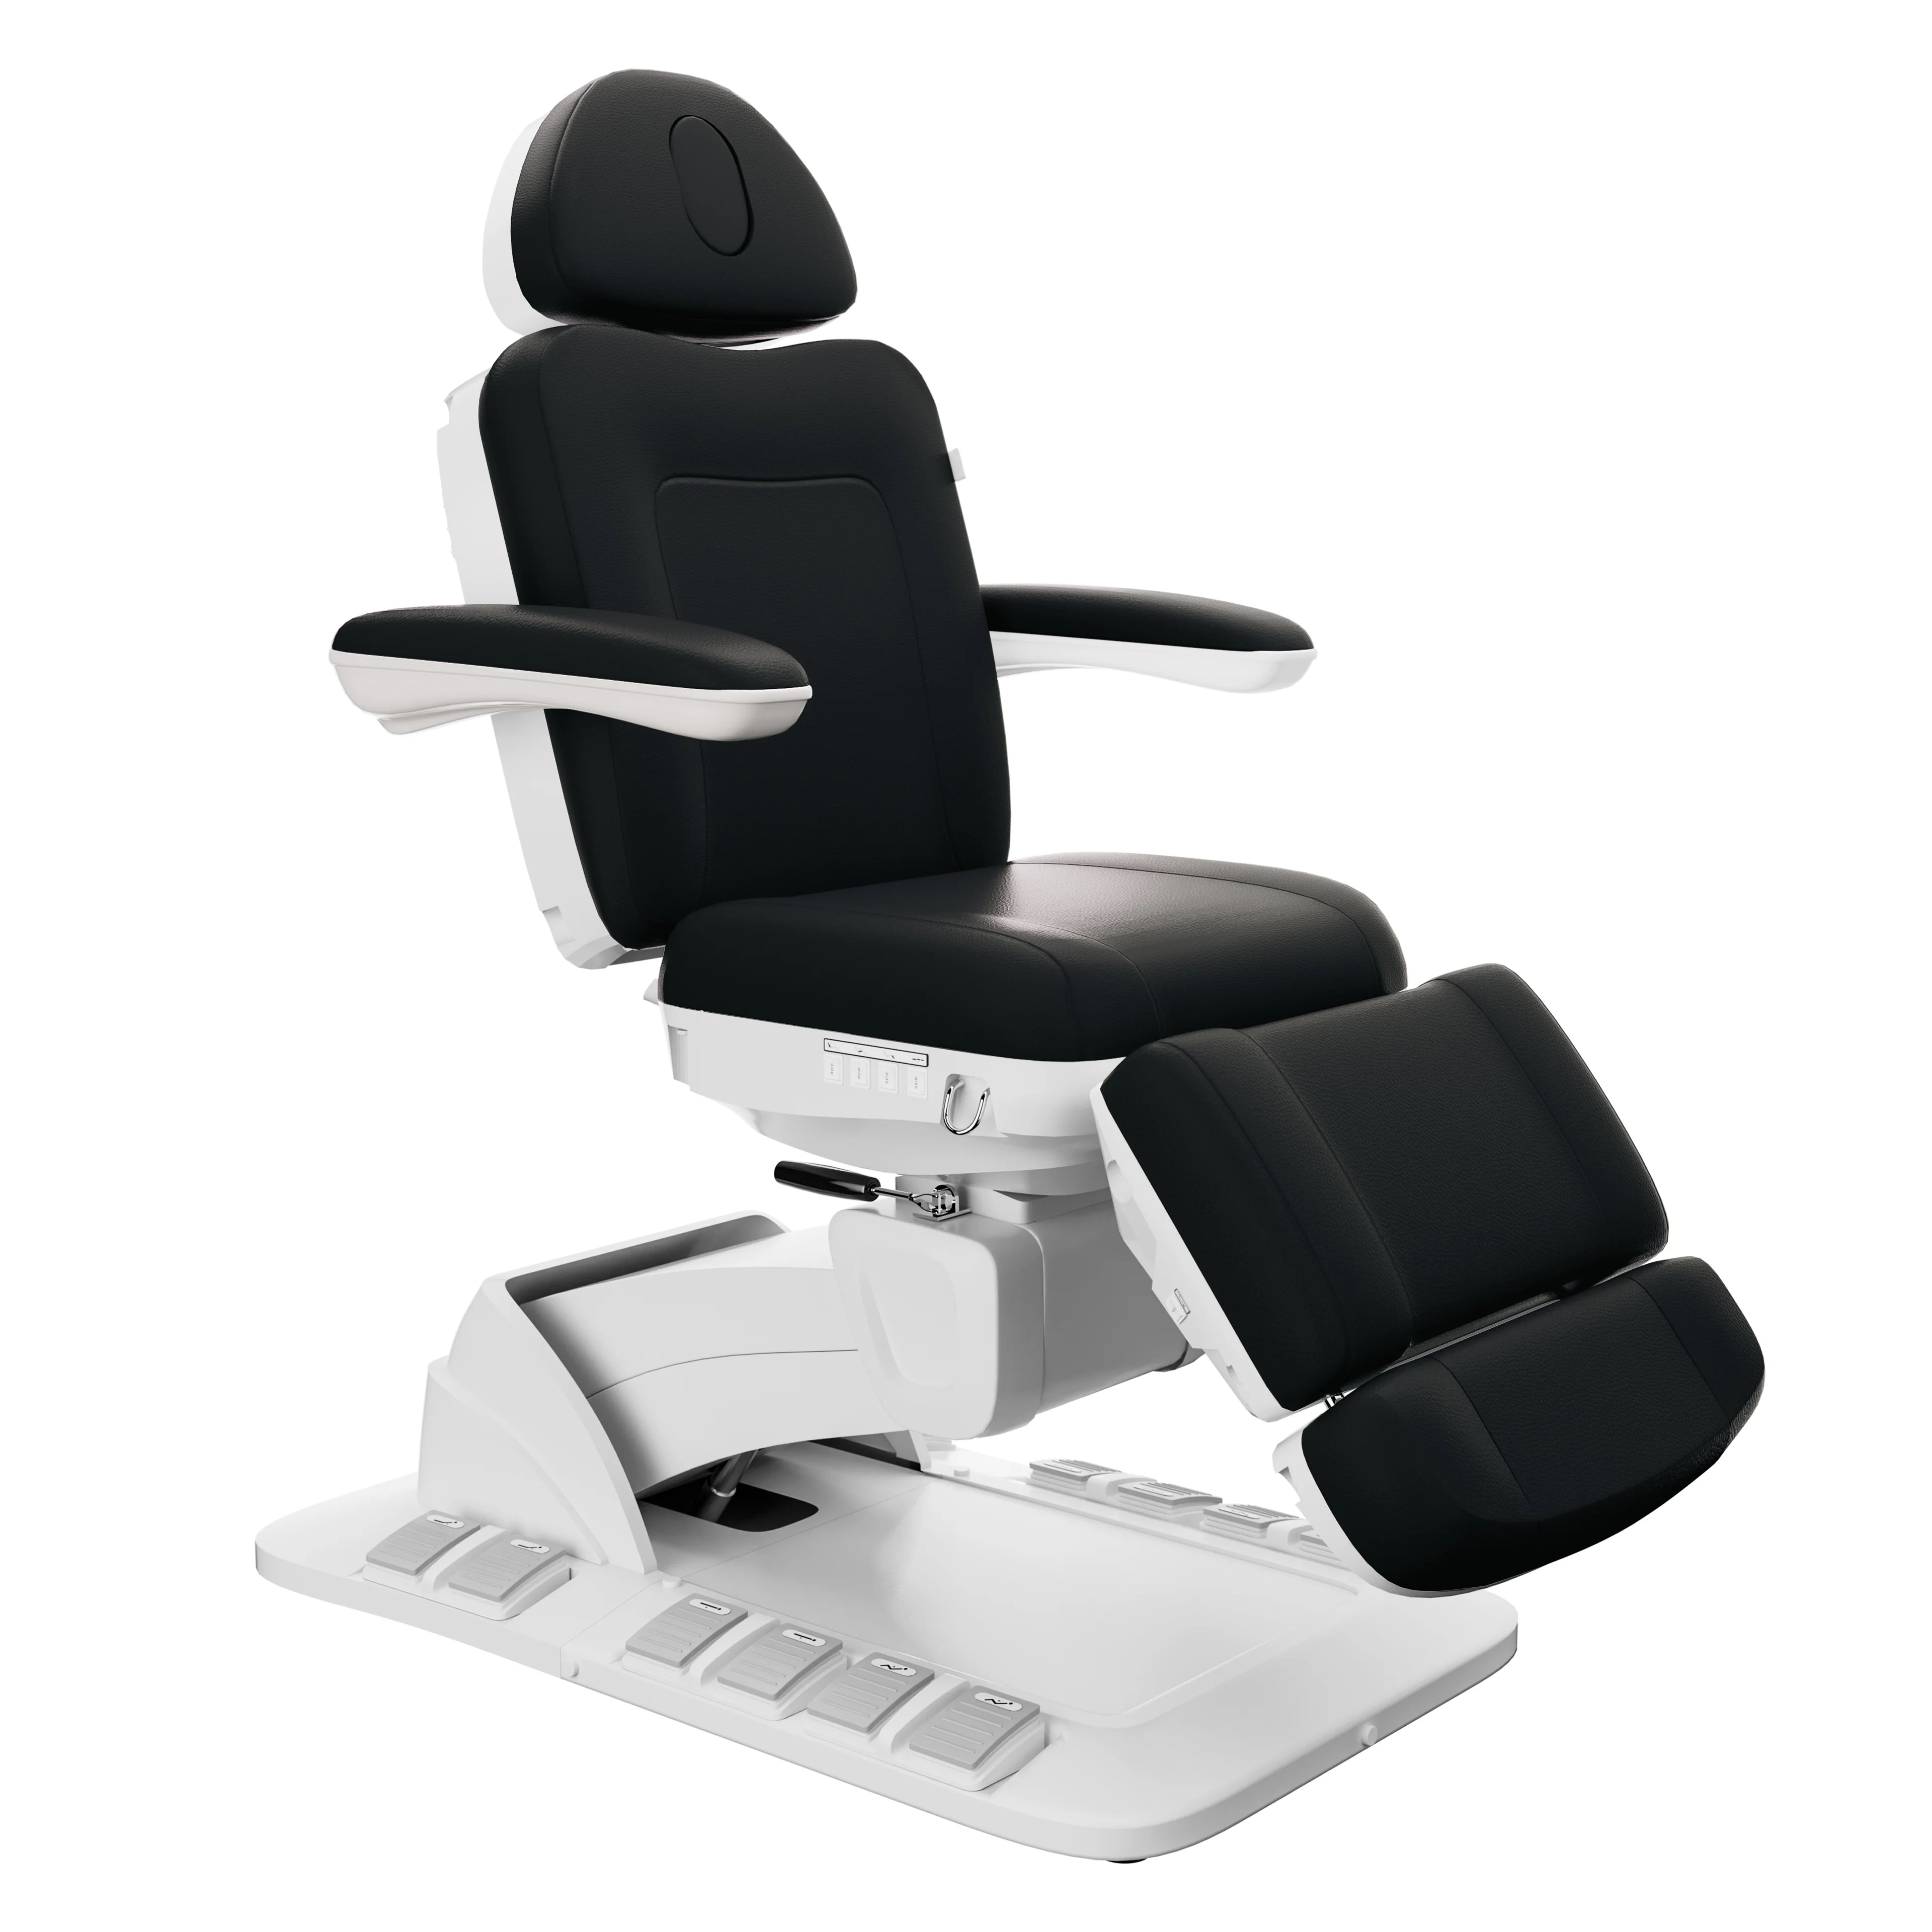 SpaMarc . Novato (Black) . Rotating . 4 Motor Spa Treatment Chair/Bed